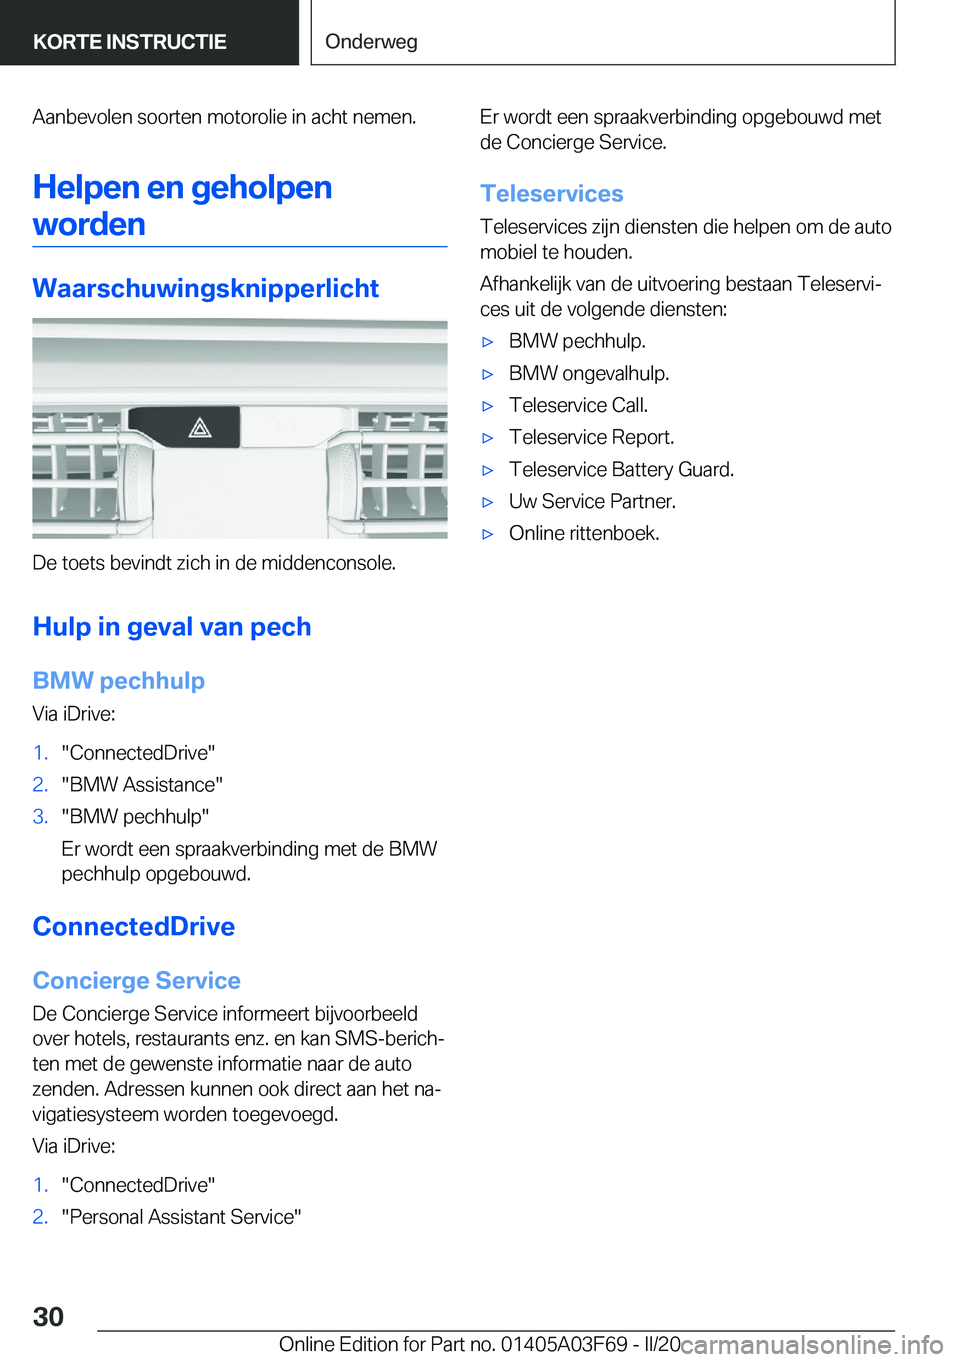 BMW 3 SERIES 2020  Instructieboekjes (in Dutch) �A�a�n�b�e�v�o�l�e�n��s�o�o�r�t�e�n��m�o�t�o�r�o�l�i�e��i�n��a�c�h�t��n�e�m�e�n�.�H�e�l�p�e�n��e�n��g�e�h�o�l�p�e�n�w�o�r�d�e�n
�W�a�a�r�s�c�h�u�w�i�n�g�s�k�n�i�p�p�e�r�l�i�c�h�t
�D�e��t�o�e�t